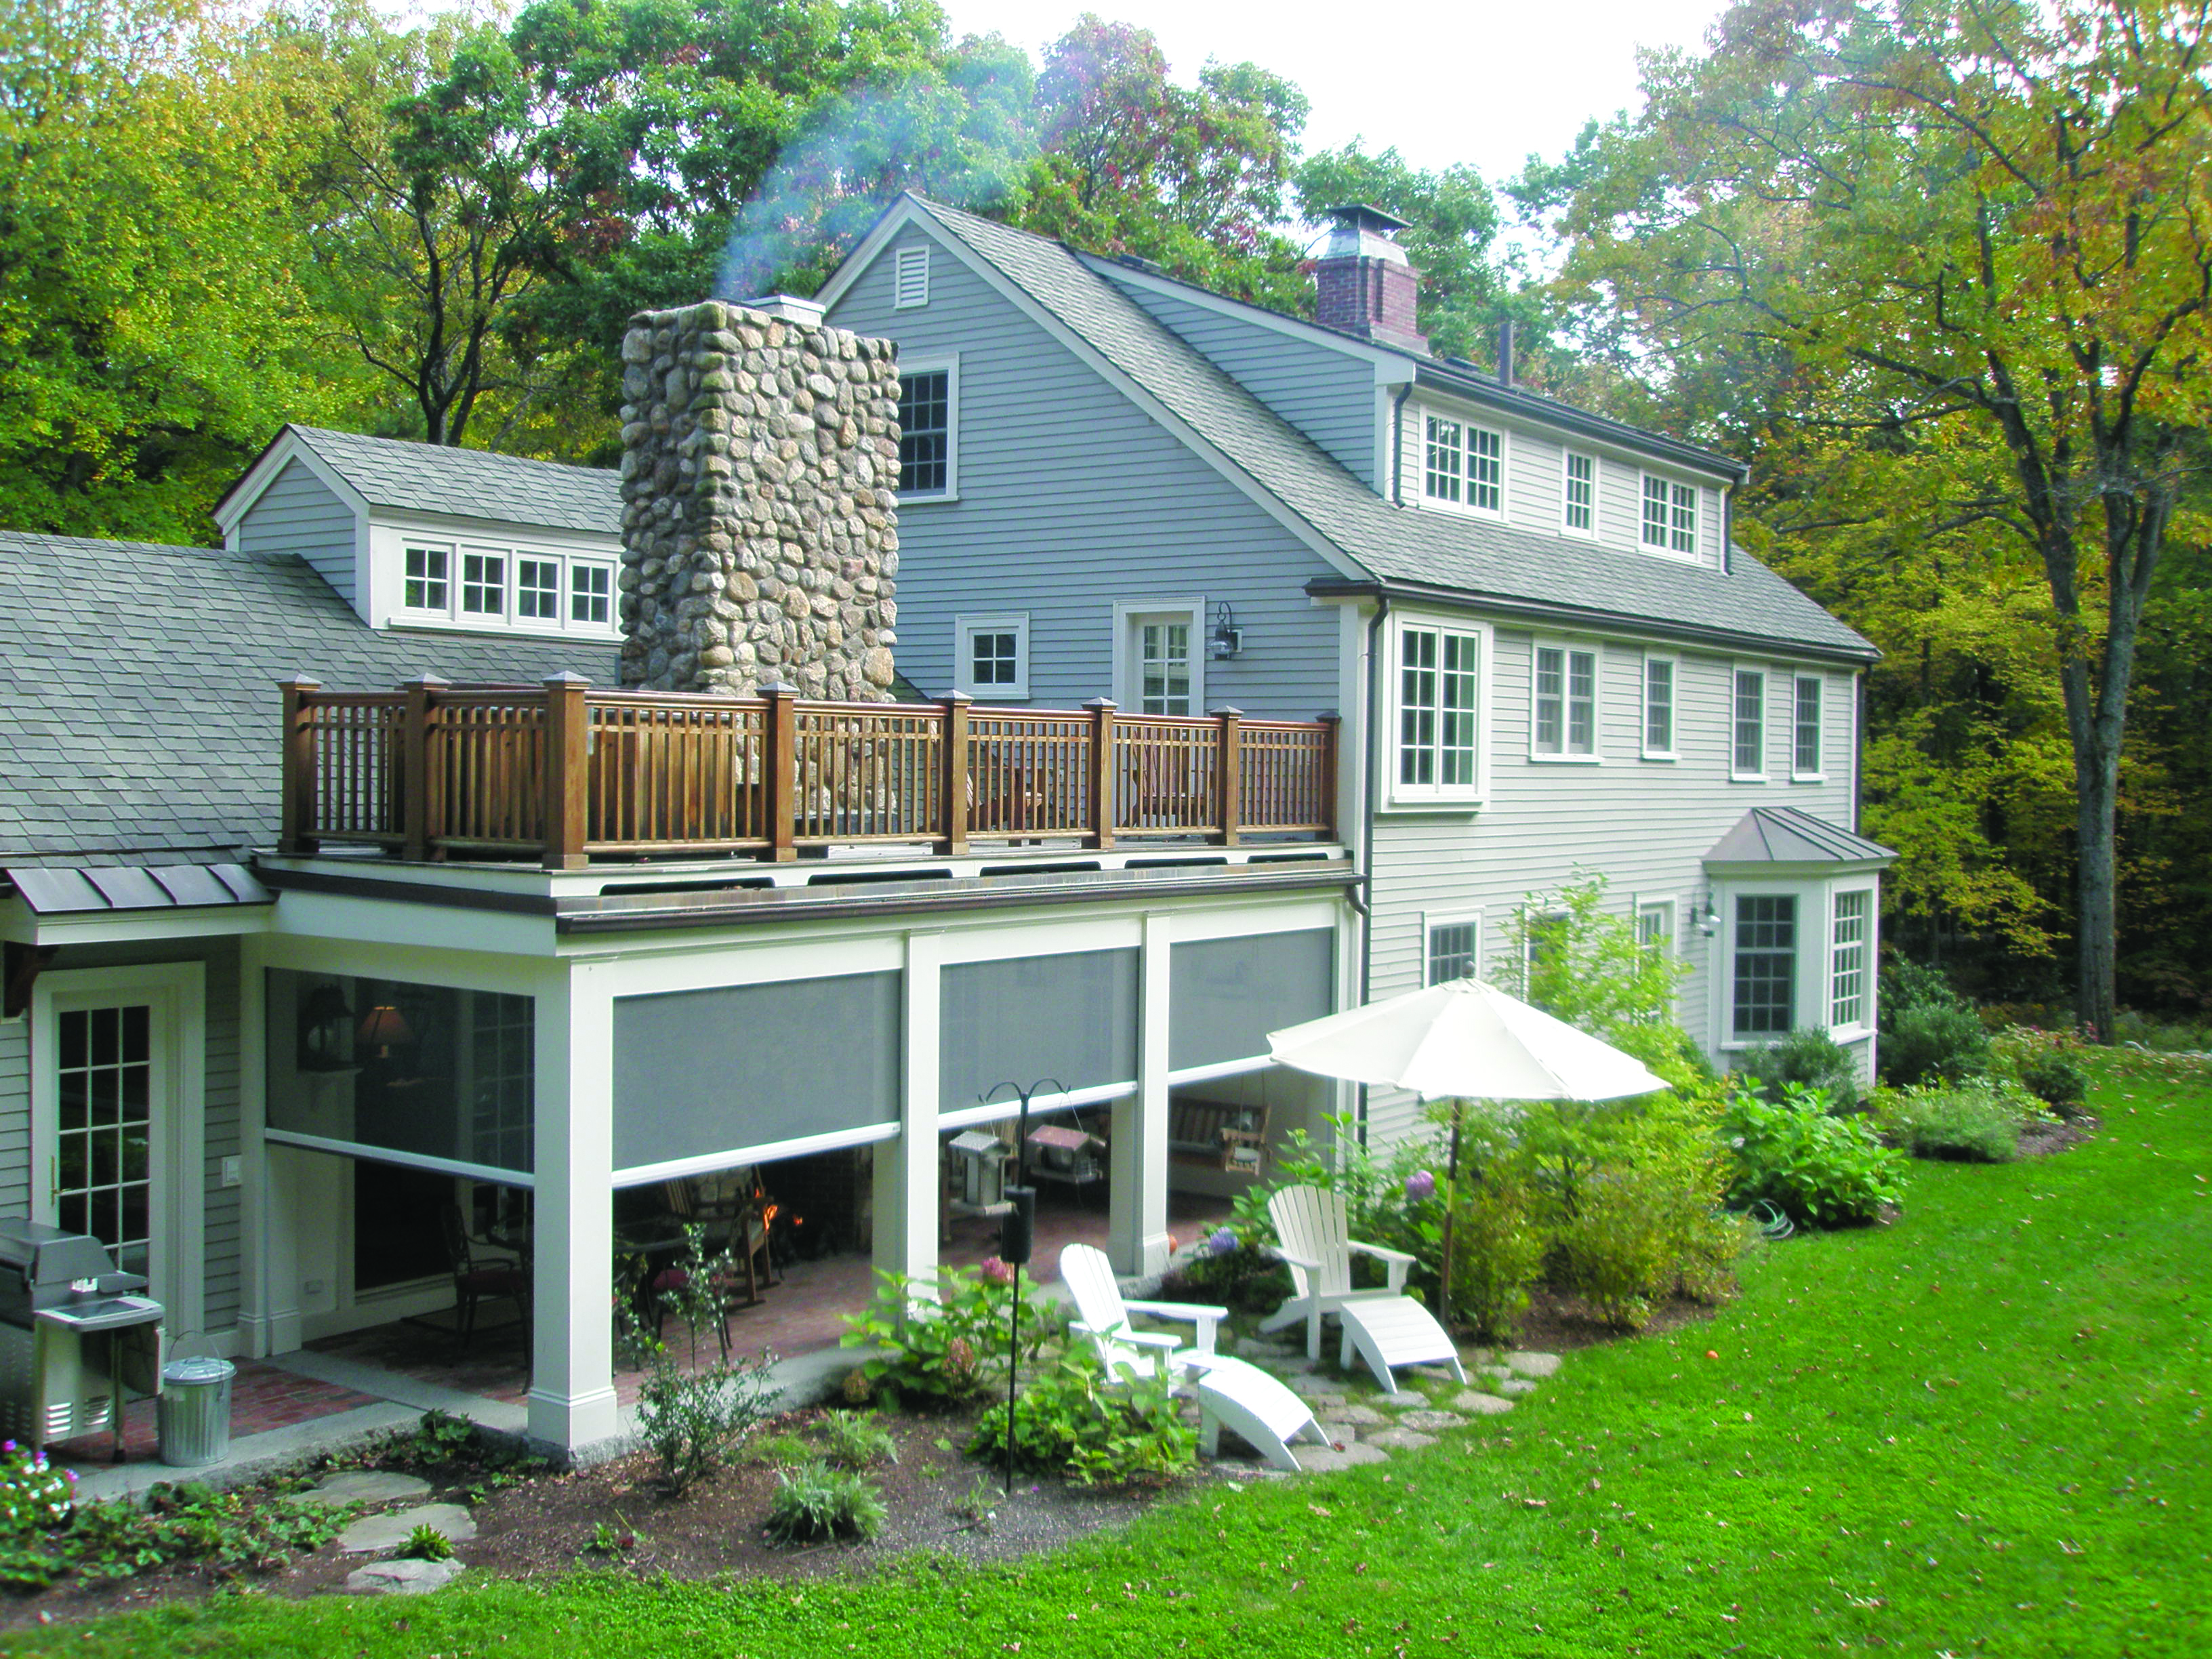 Classic New England Homes | Nabelea.com